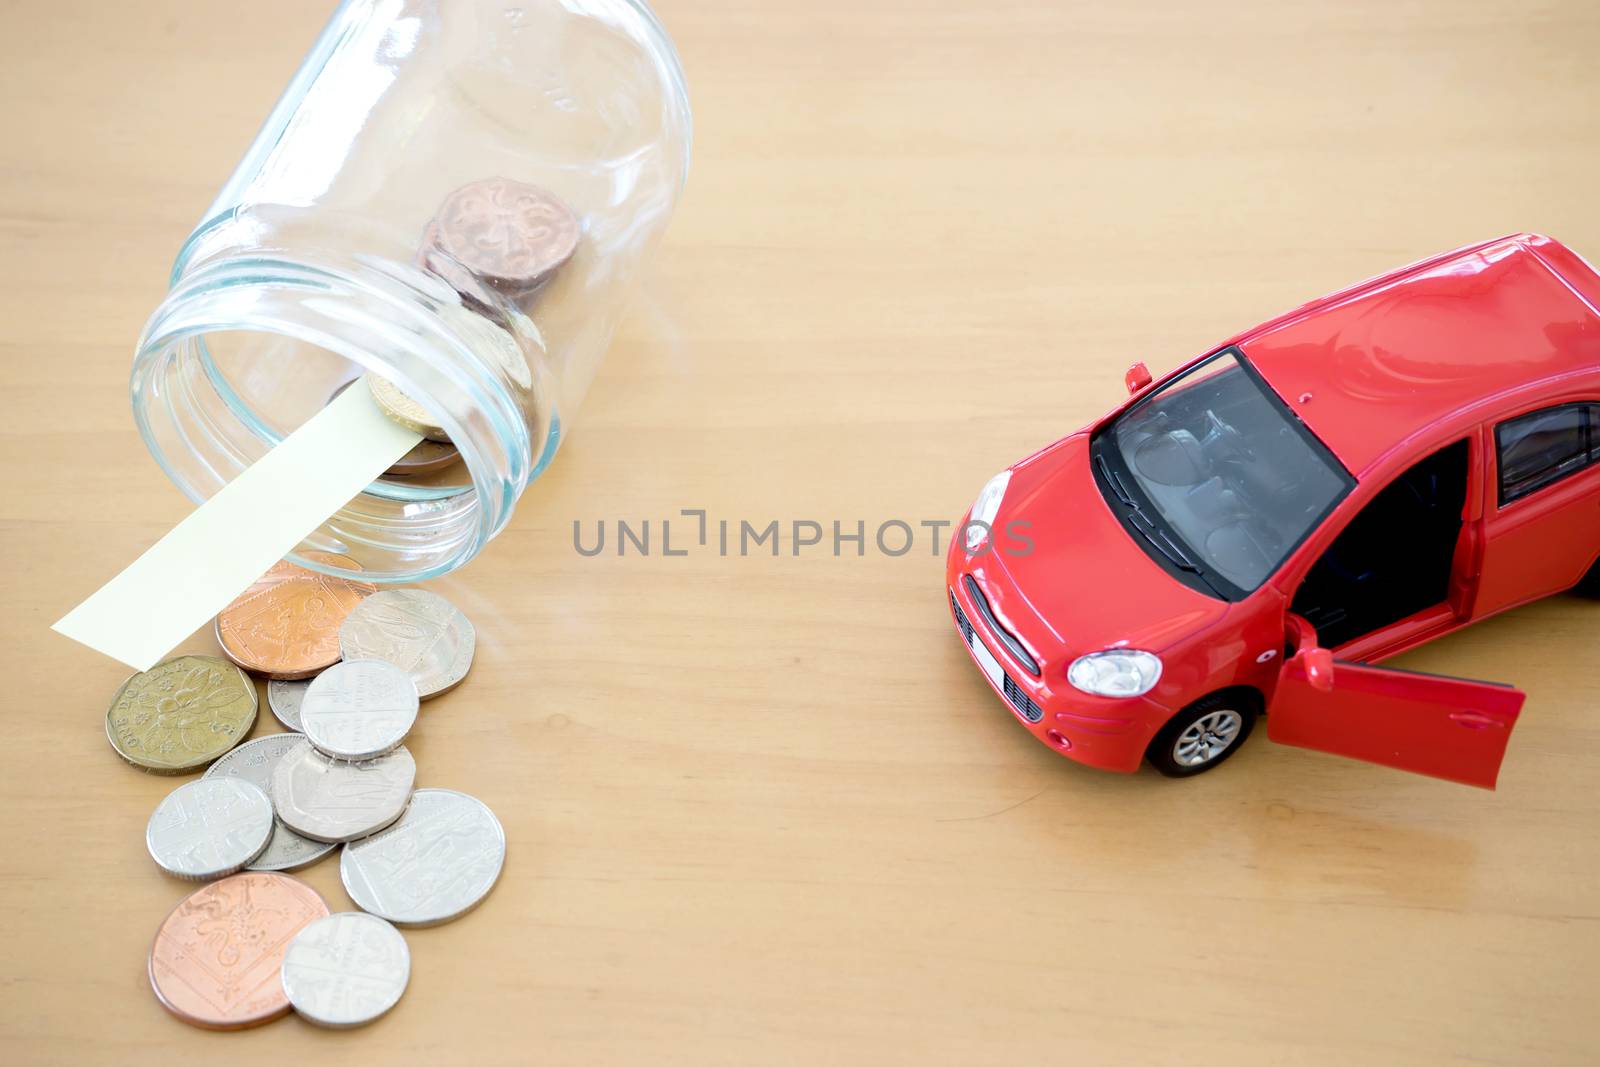 Money saving for Car in the glass bottle